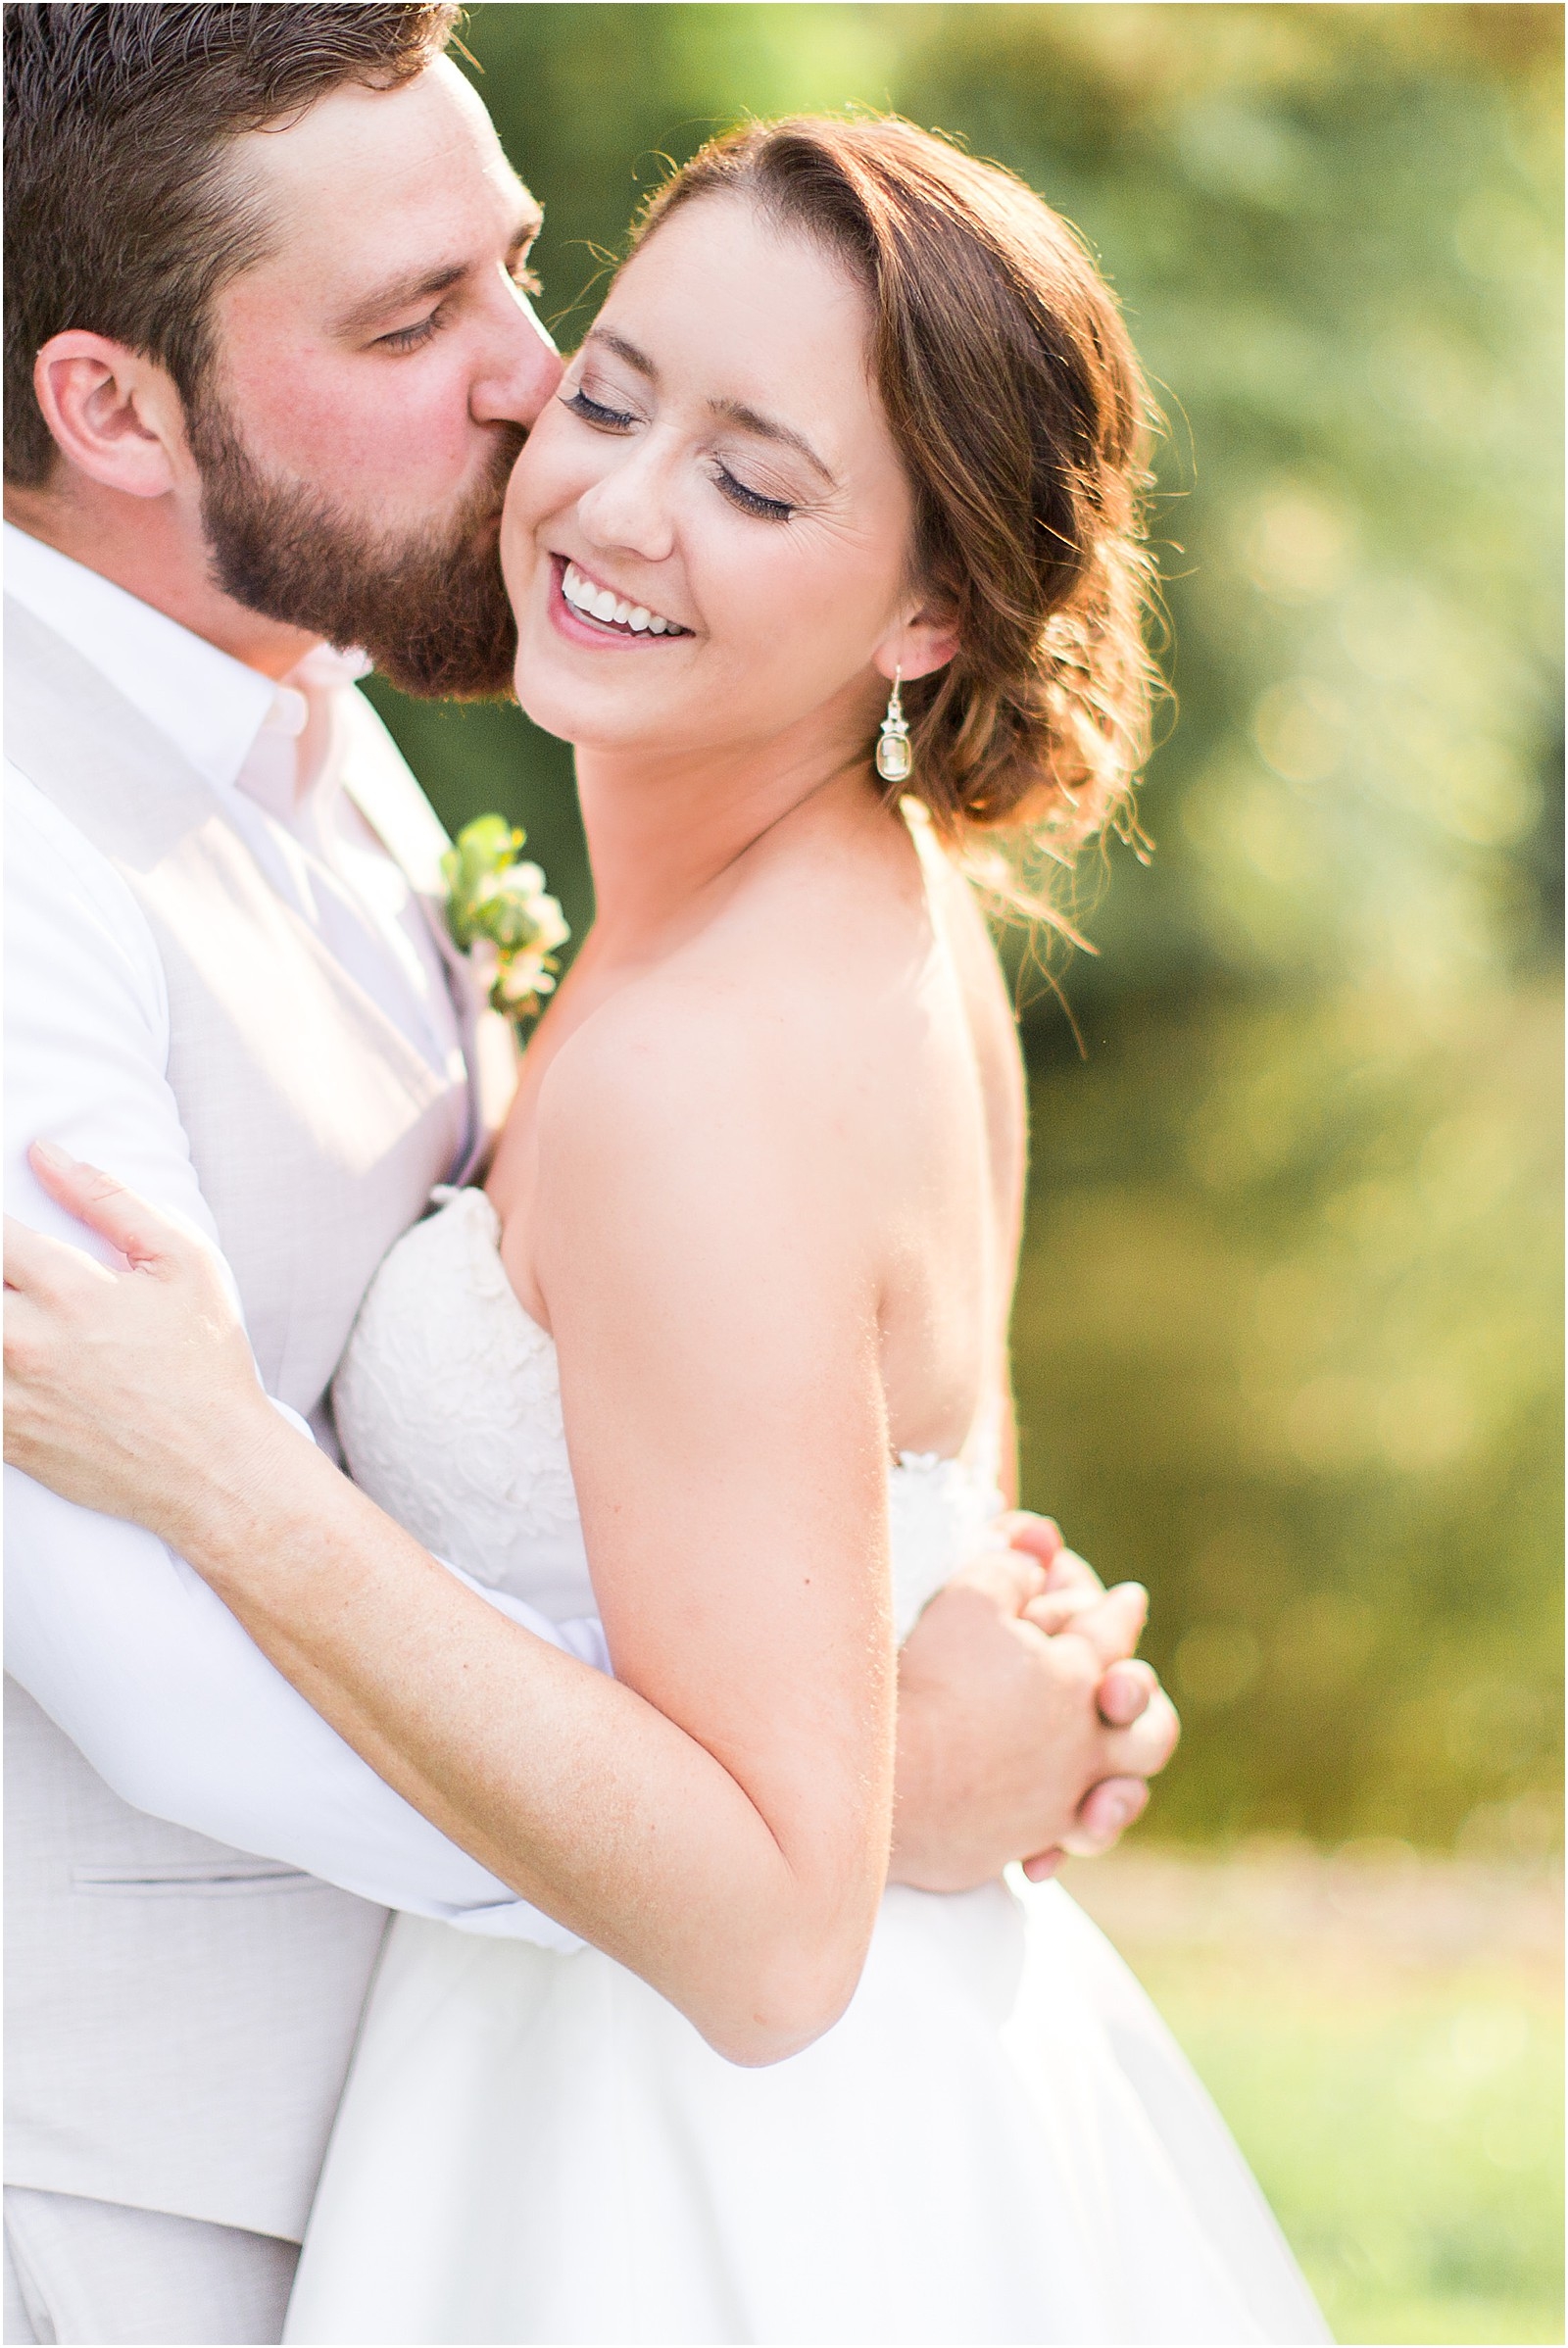 A Evansville Indiana Backyard Wedding | Bailey and Ben 073.jpg